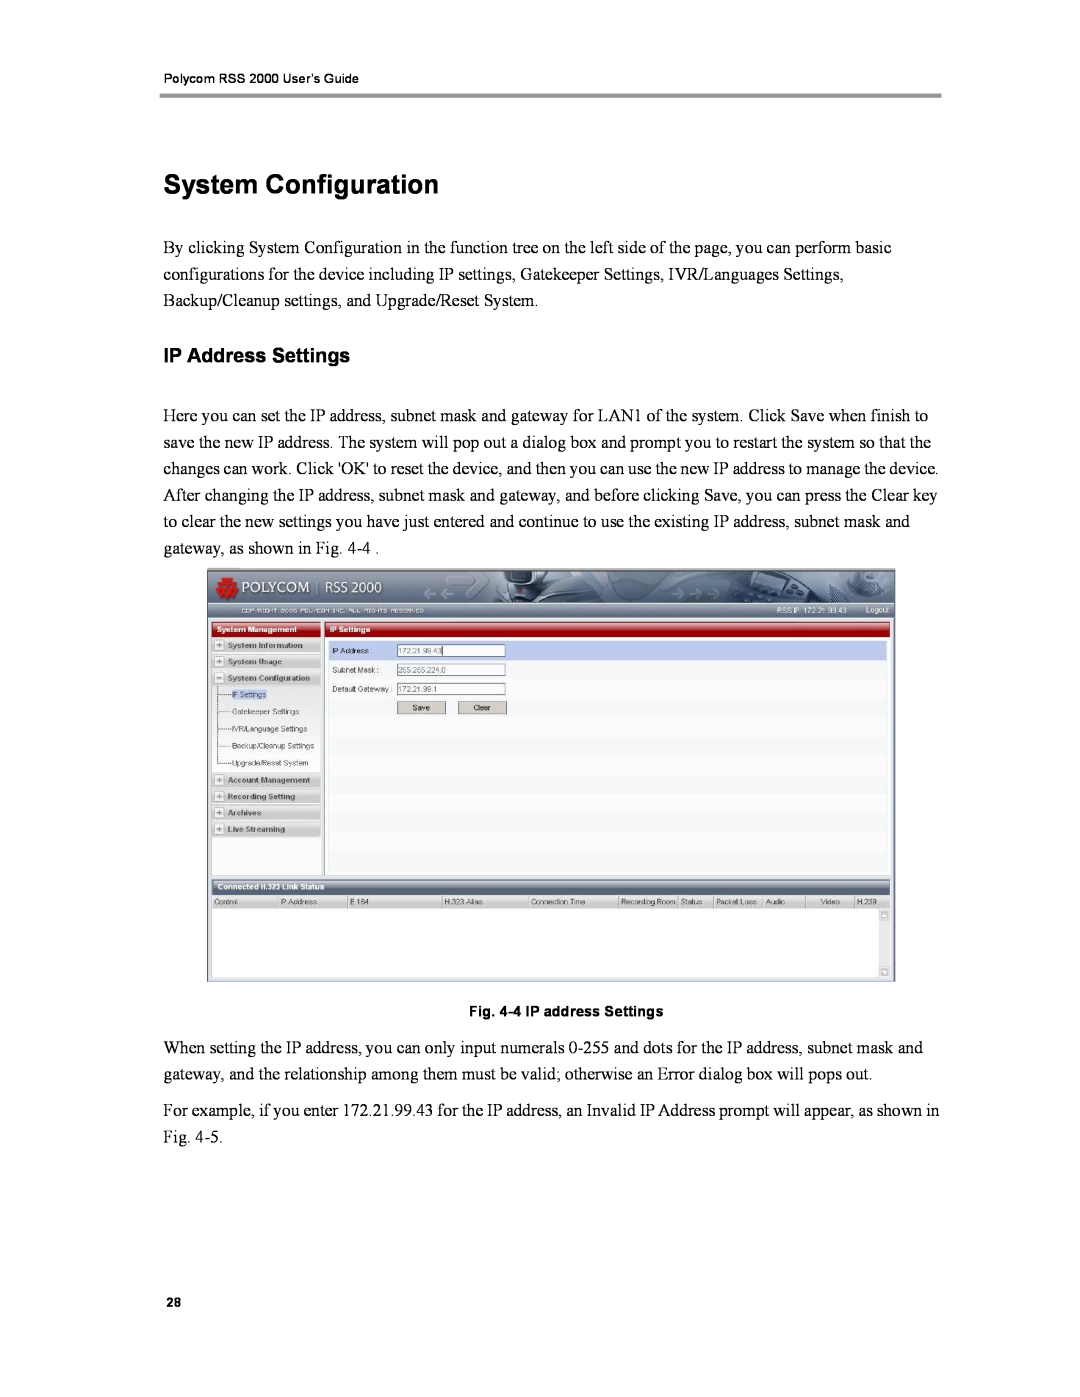 Polycom RSS 2000 manual System Configuration, IP Address Settings 